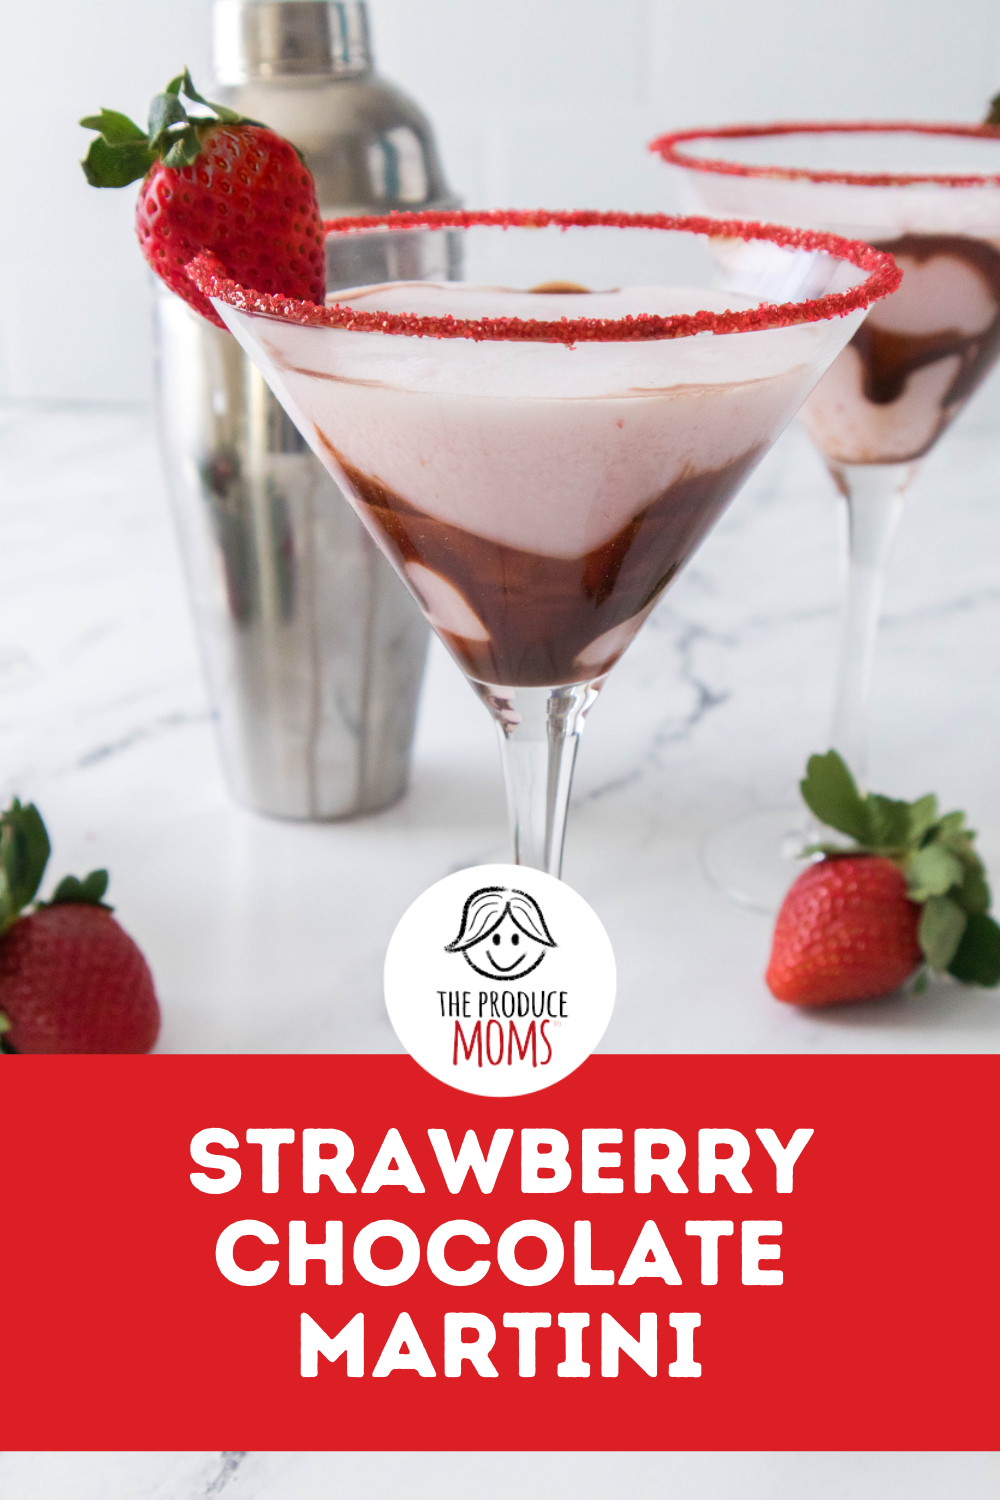 Pinterest: Strawberry Chocolate Martini